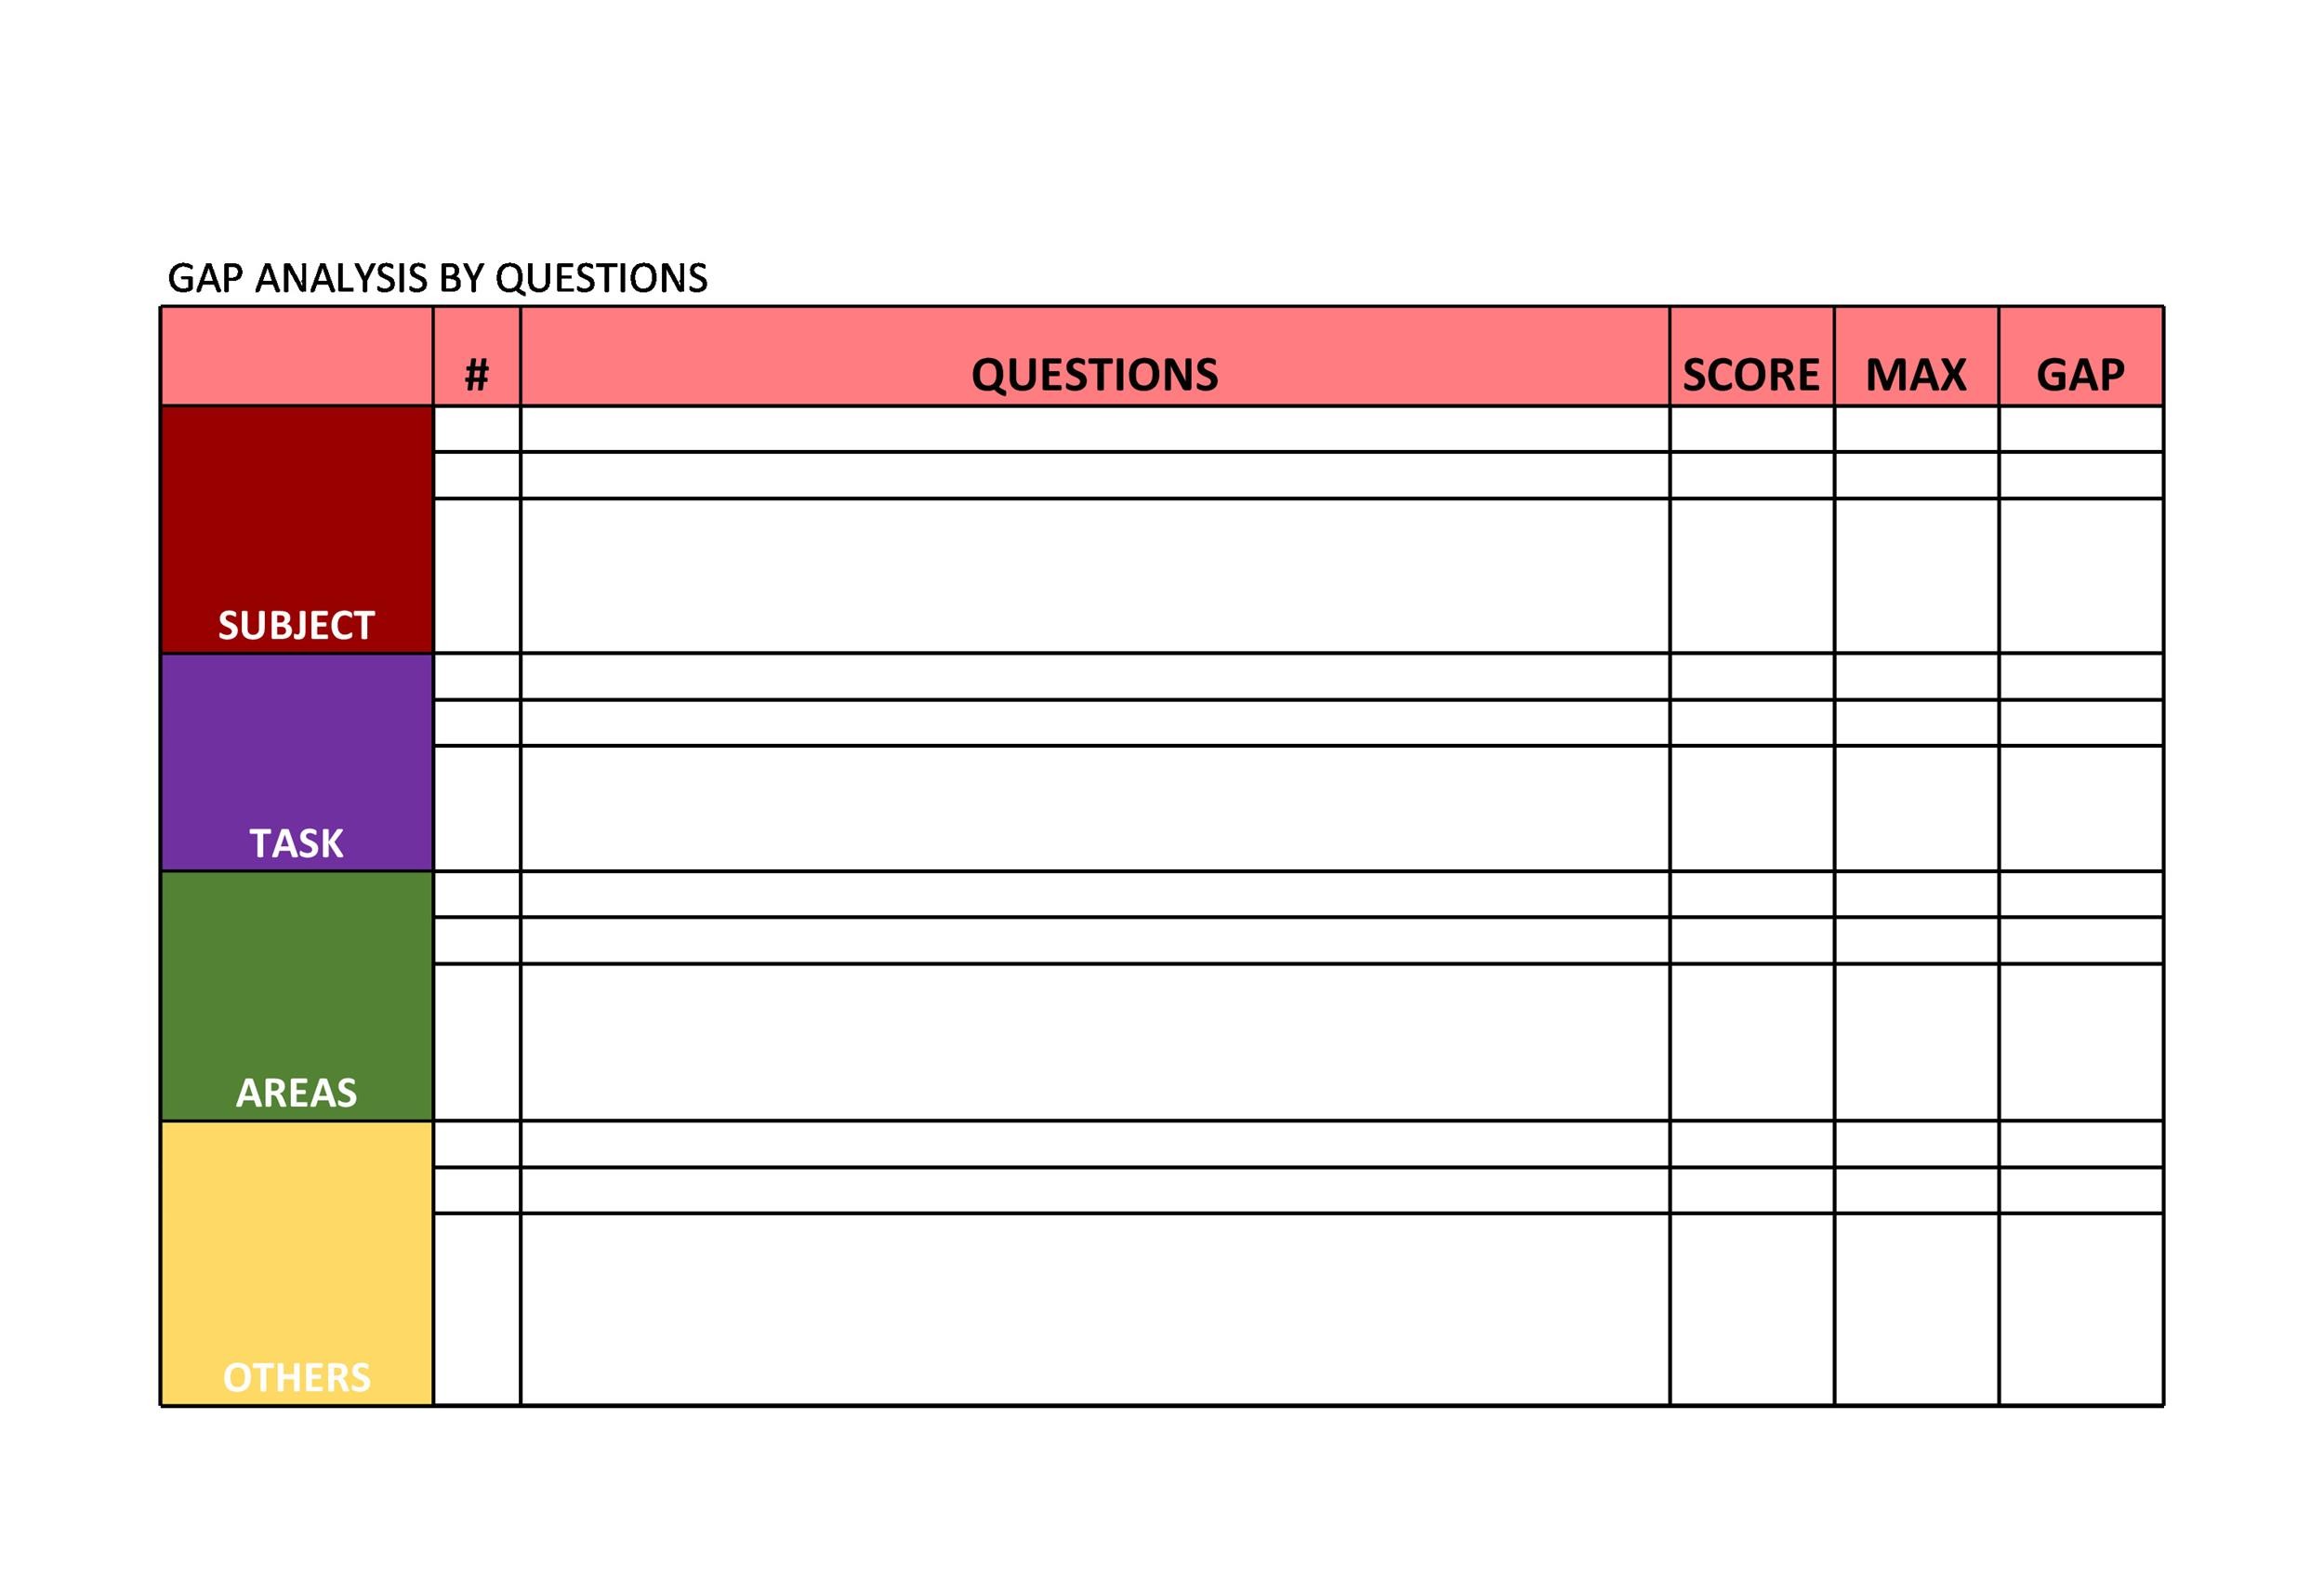 Task Analysis Chart Template